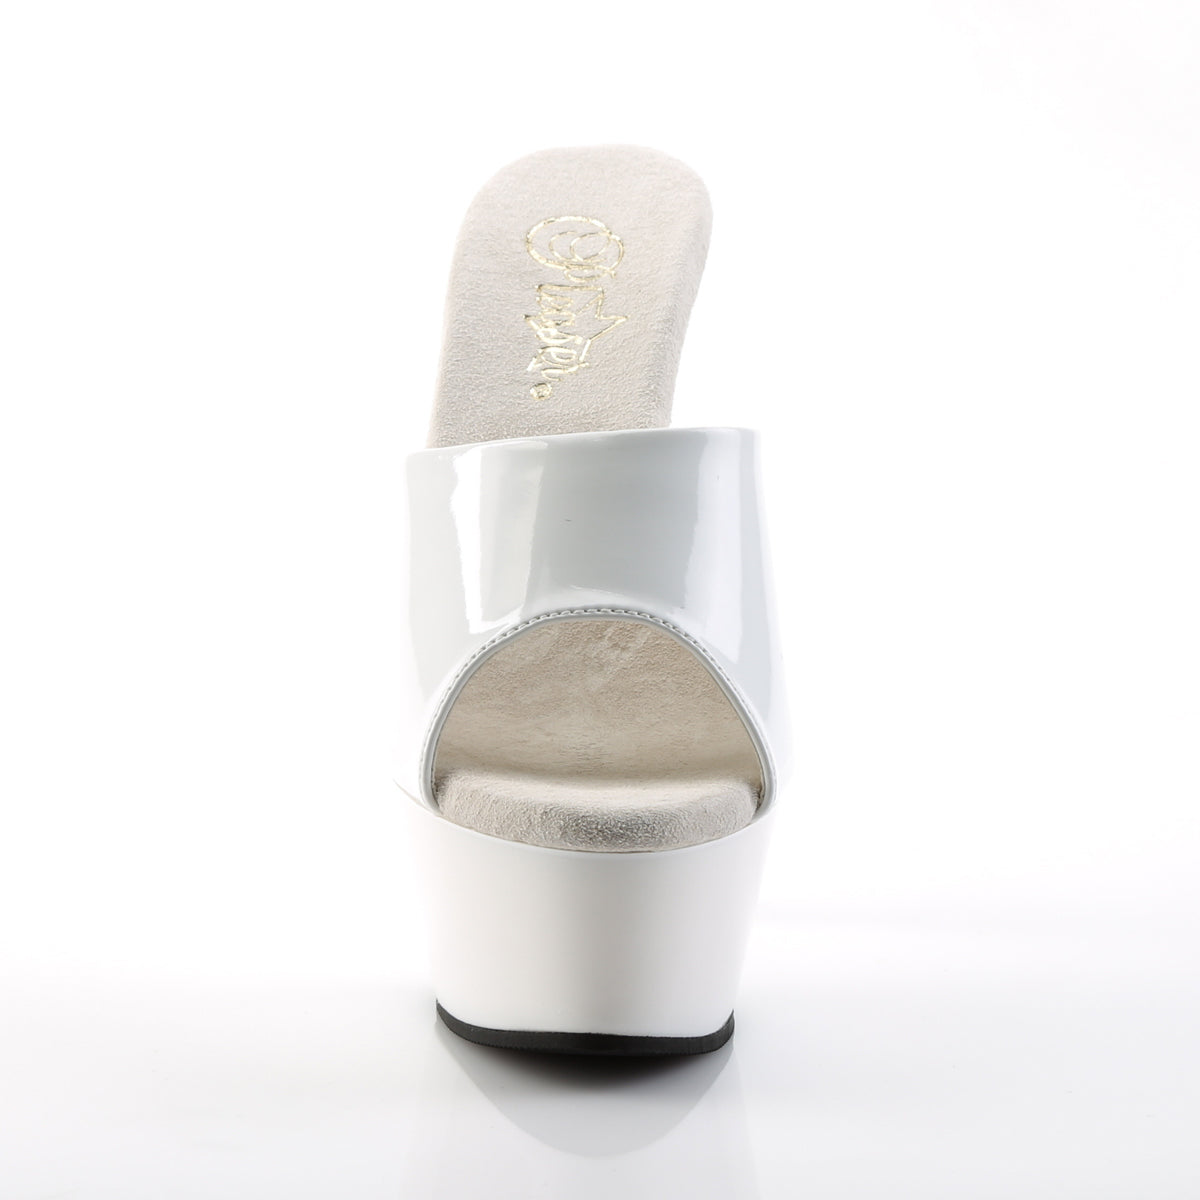 KISS-201 Pleaser 6" Heel White Patent Pole Dancing Platforms-Pleaser- Sexy Shoes Alternative Footwear